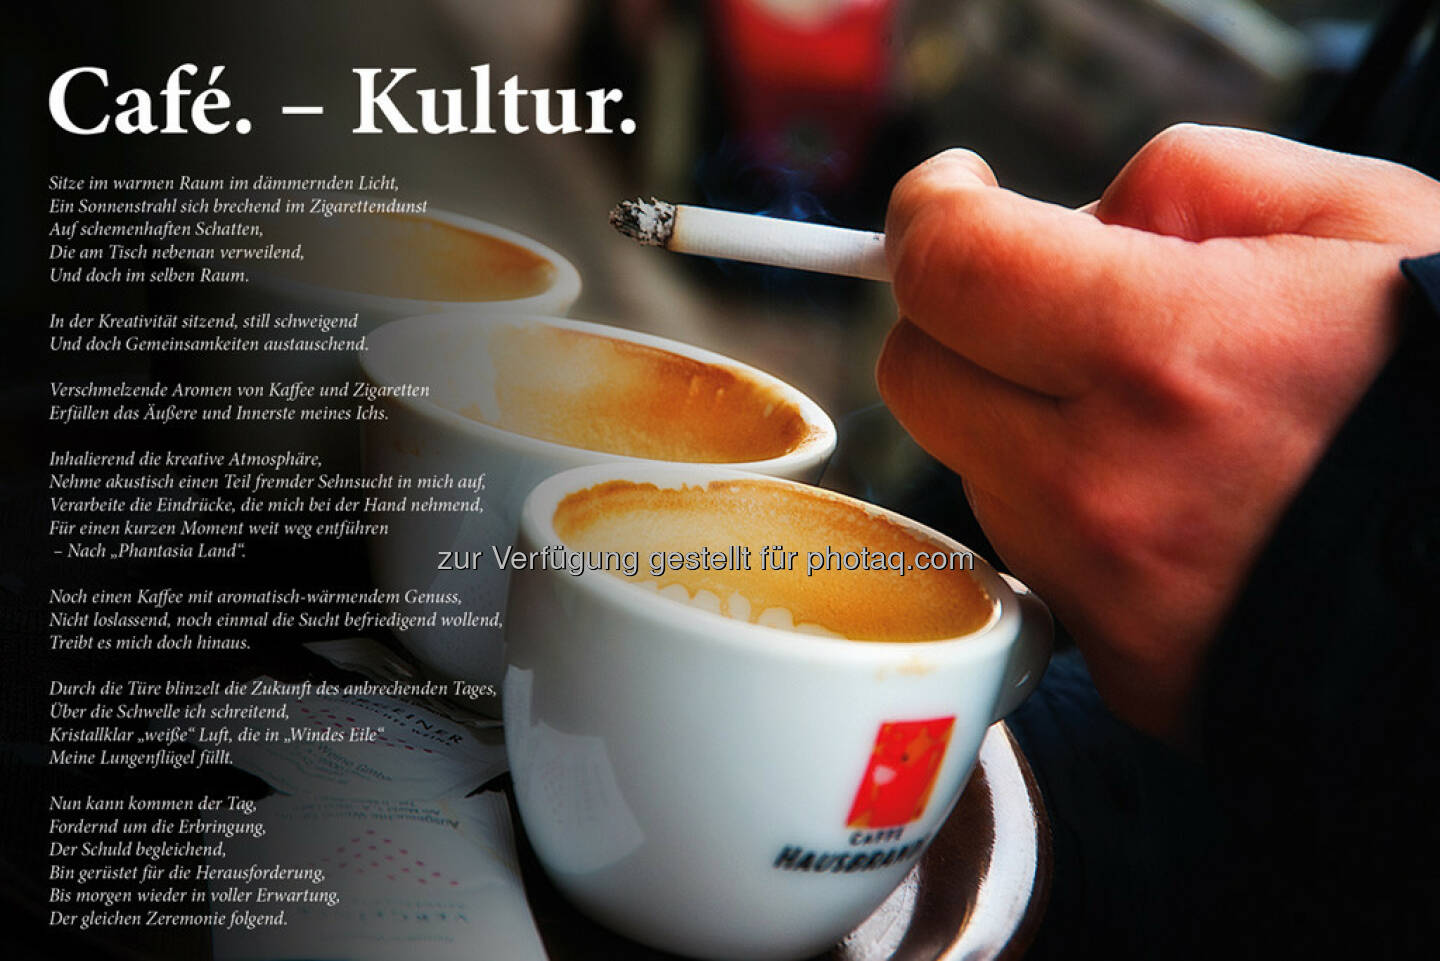 Café. - Kultur, by Detlef Löffler, http://loefflerpix.com/